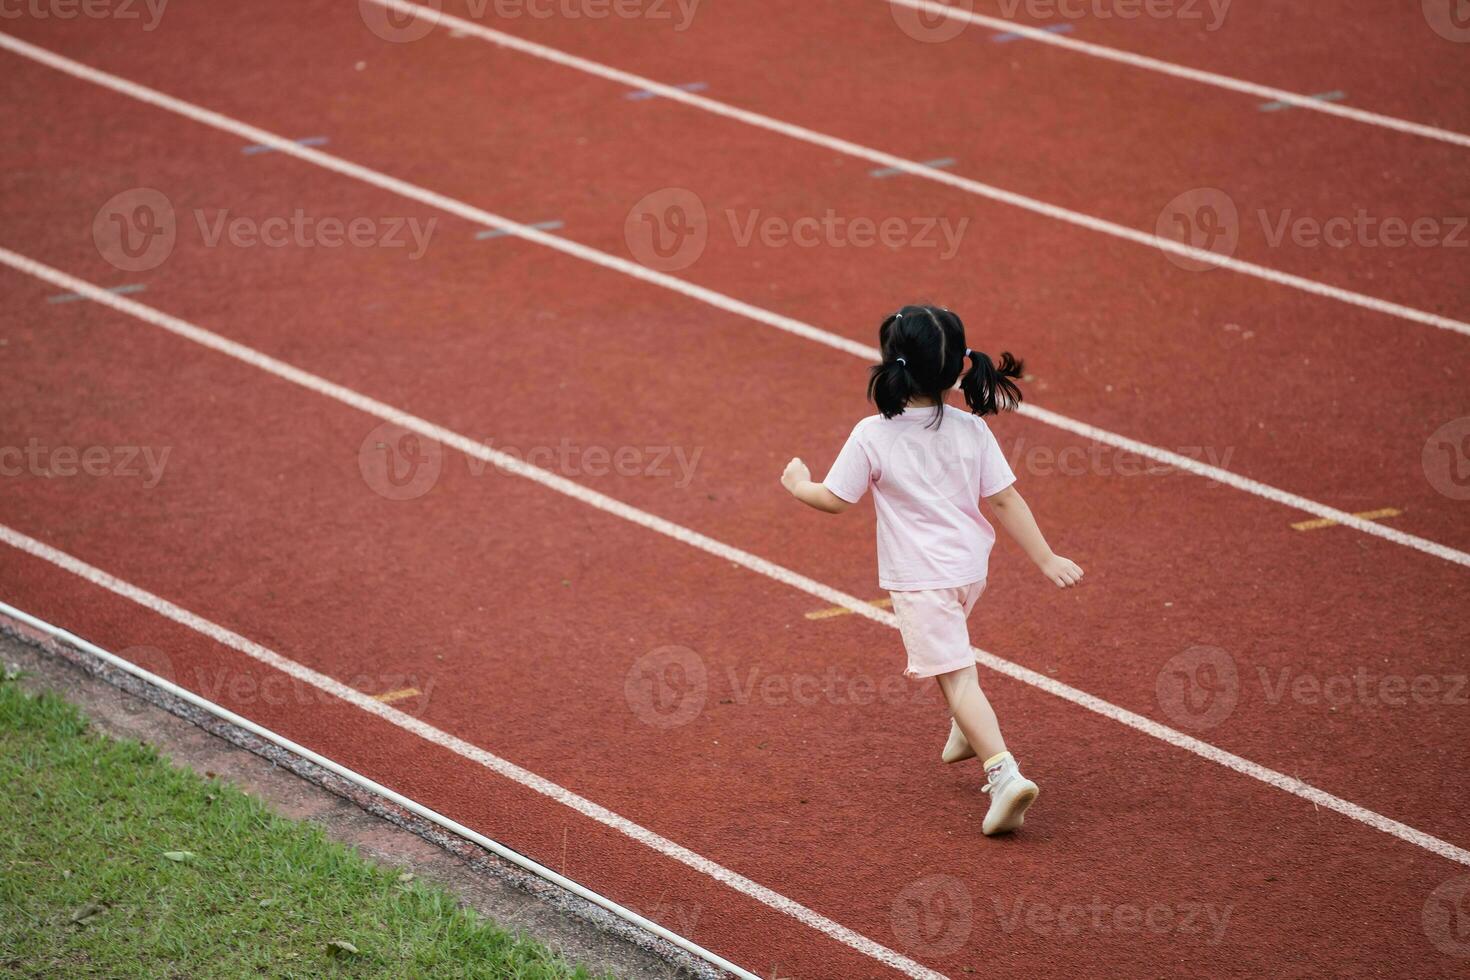 baby Aziatisch meisje rennen jogging Bij rennen spoor, rennen veld- Bij stadion. weinig meisje rennen Bij zonsondergang gelukkig baby meisje lachend. weinig meisje rennen Bij zonsondergang. schattig baby meisje rennen Bij rennen spoor. foto